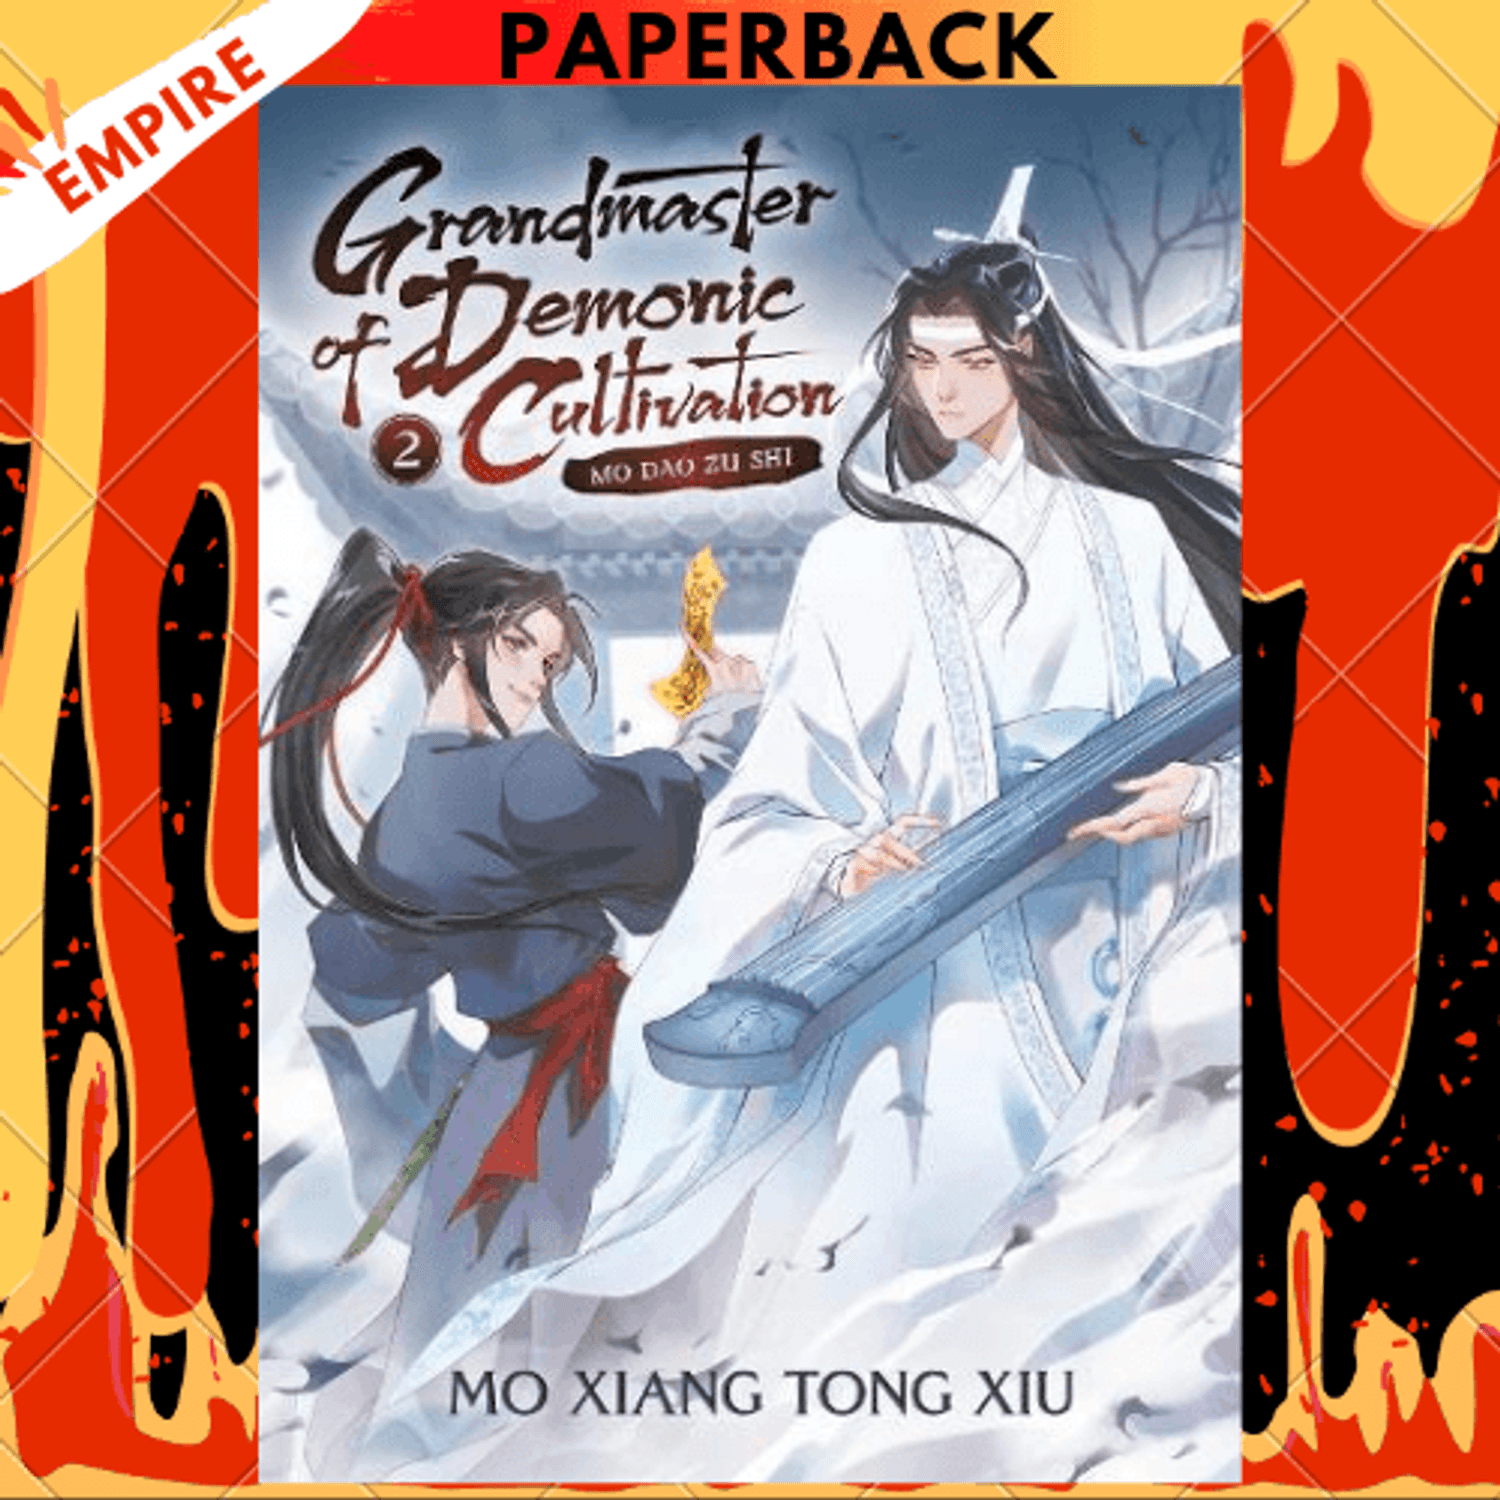 Grandmaster of Demonic Cultivation: Mo Dao Zu Shi (Novel) Vol. 2 by Mo  Xiang Tong Xiu, Marina Privalova, Paperback